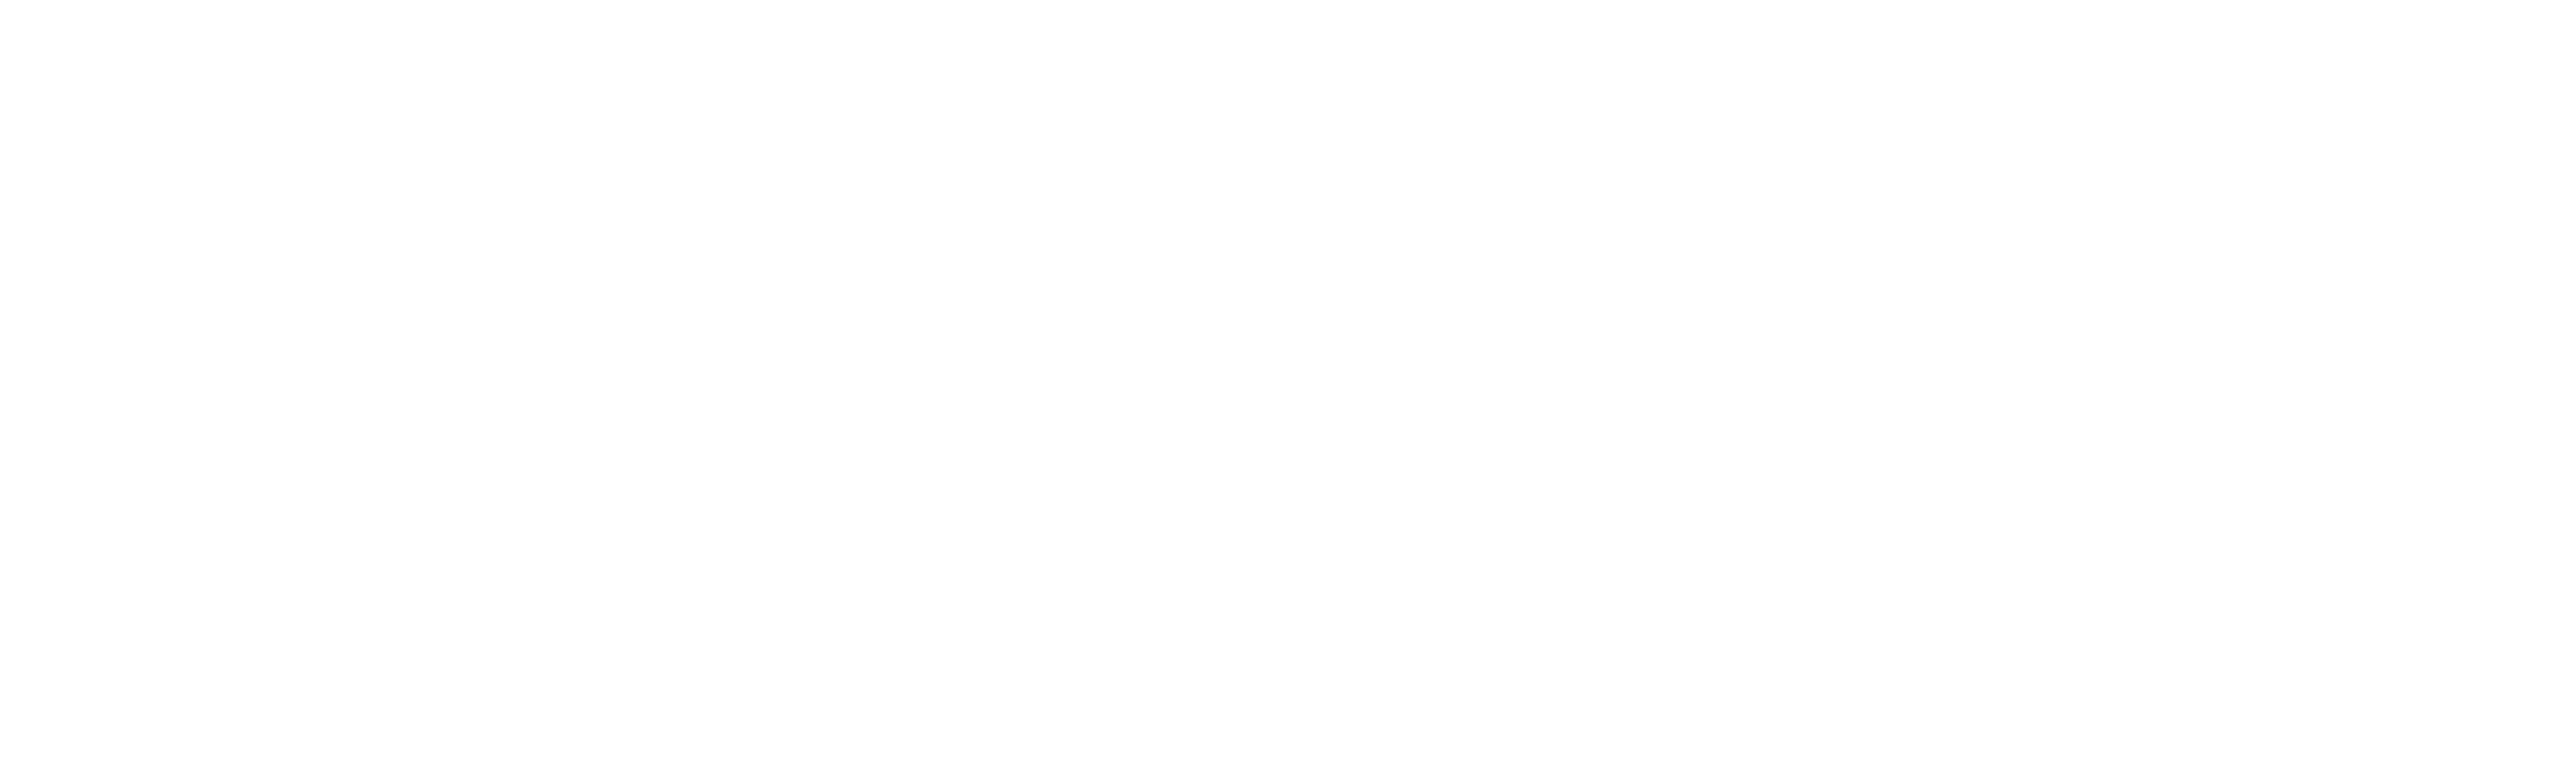 EFPR_Group_logo_1C_white